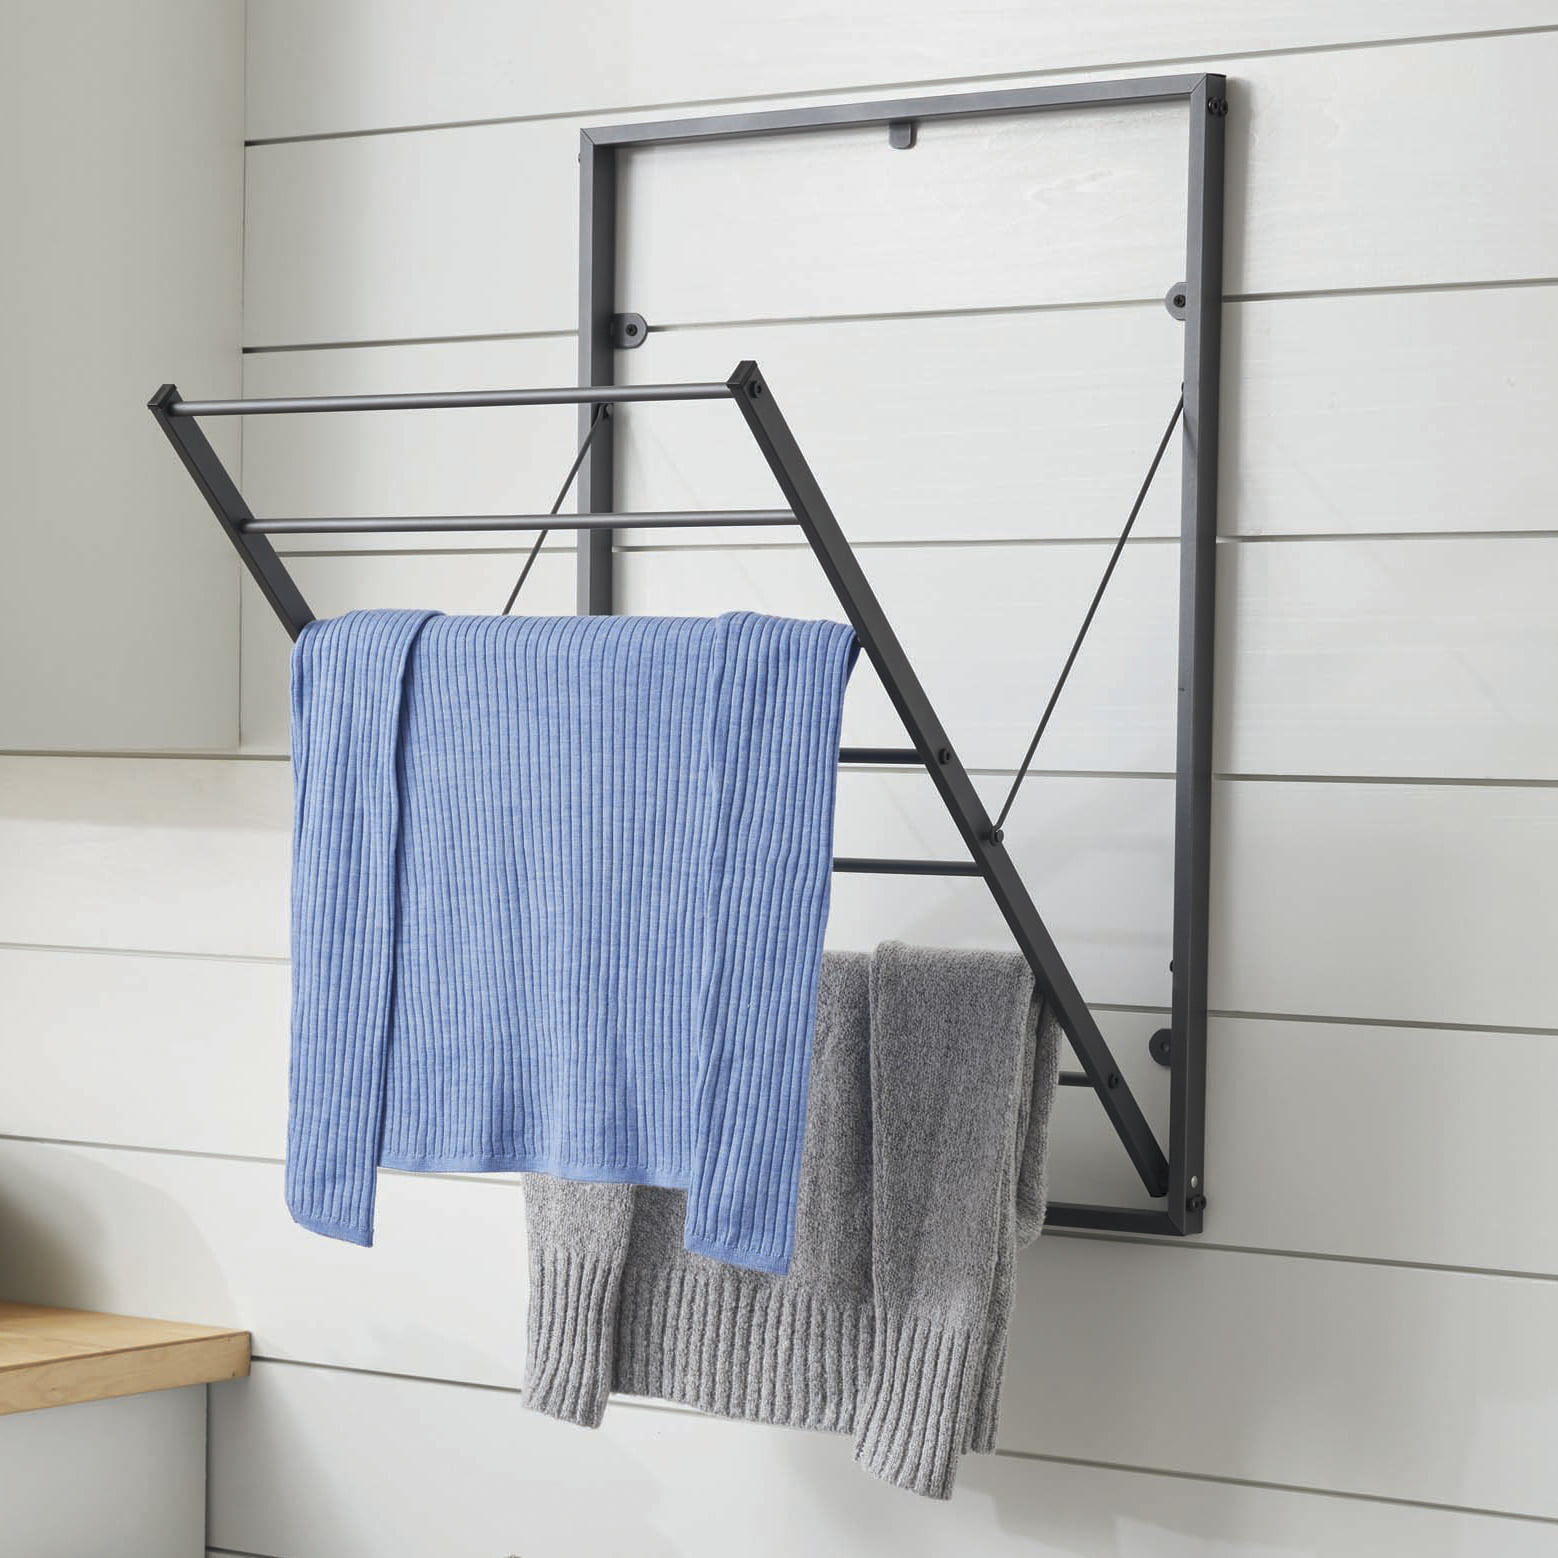 Galvanized Wall-Mount Laundry Drying Rack